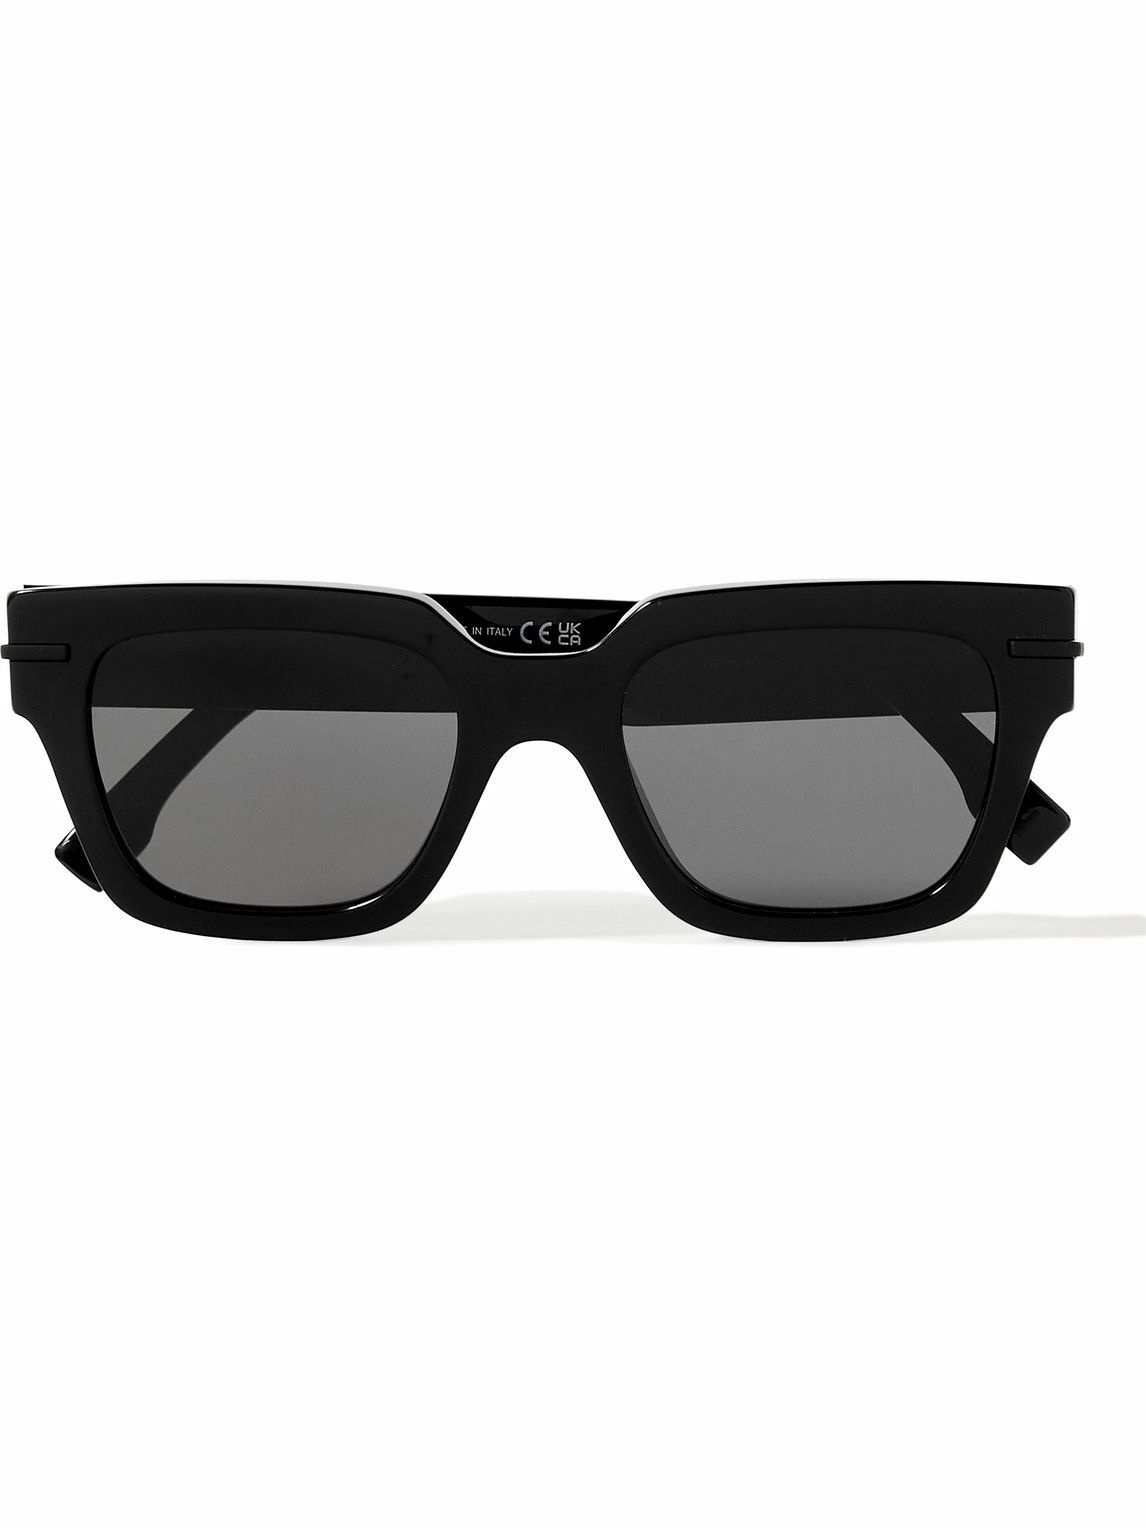 Fendi - Fendigraphy Sqaure-Frame Acetate Sunglasses Fendi